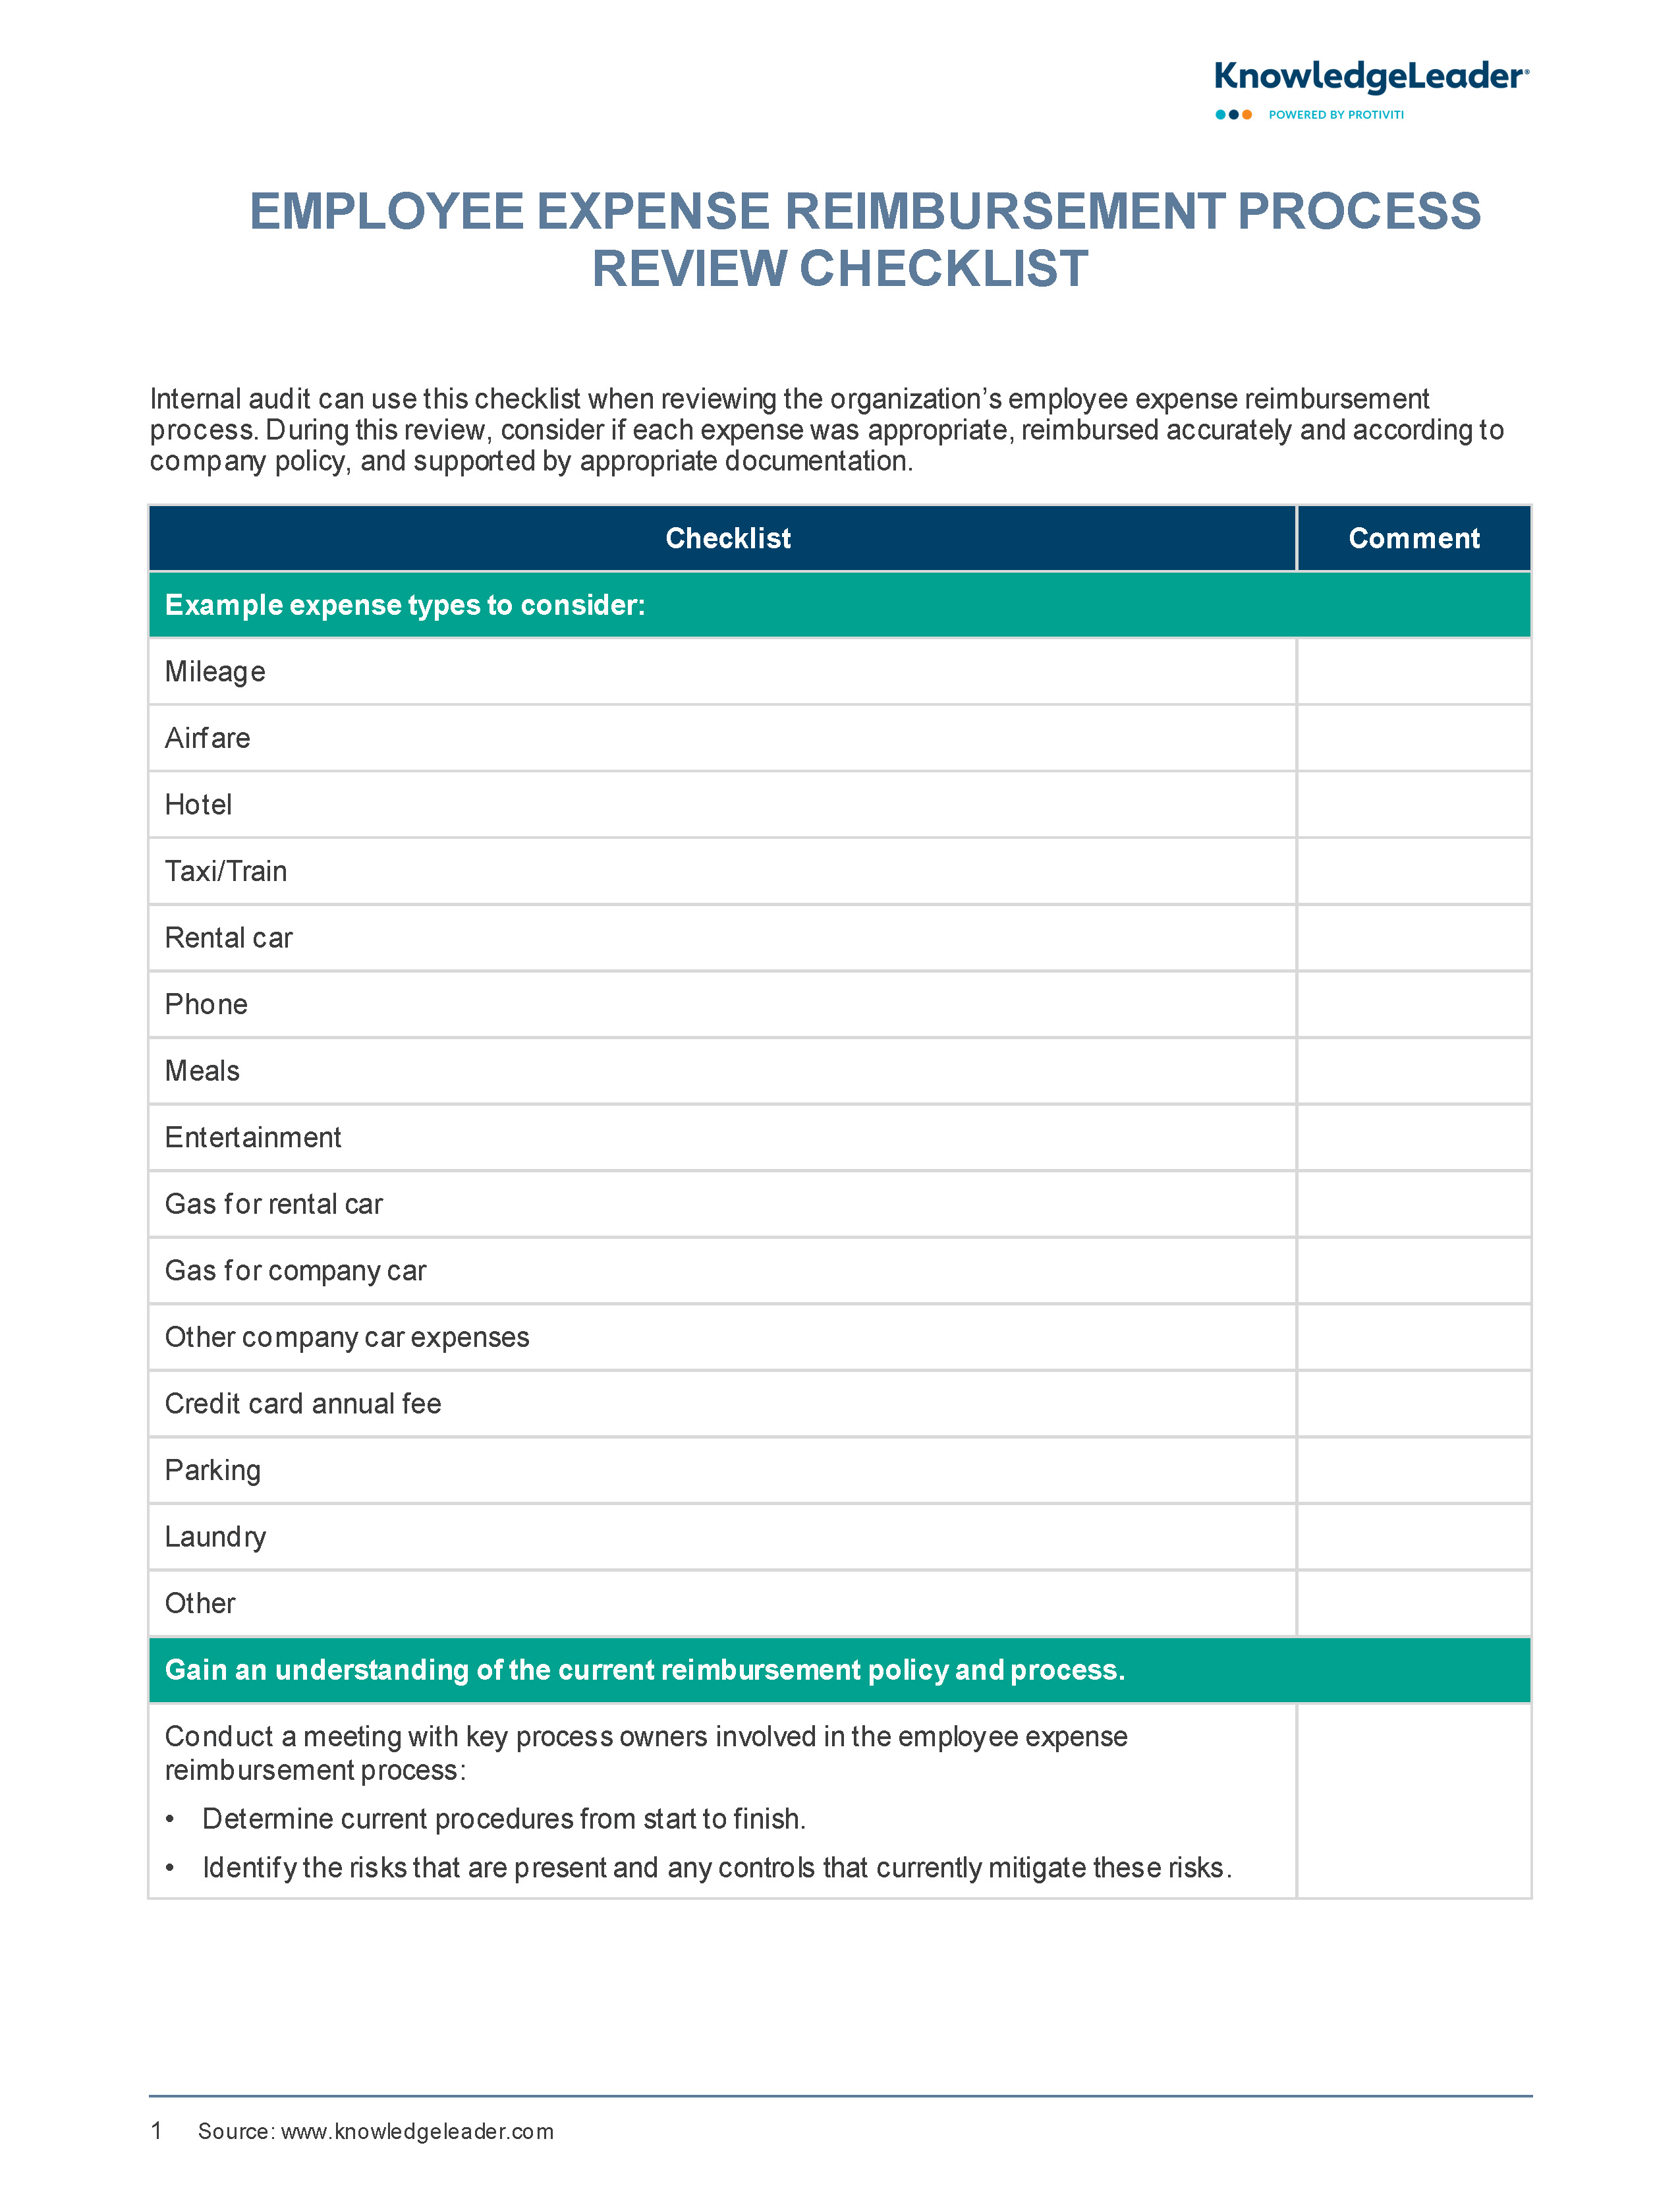 Screenshot of the first page of Employee Expense Reimbursement Process Review Checklist